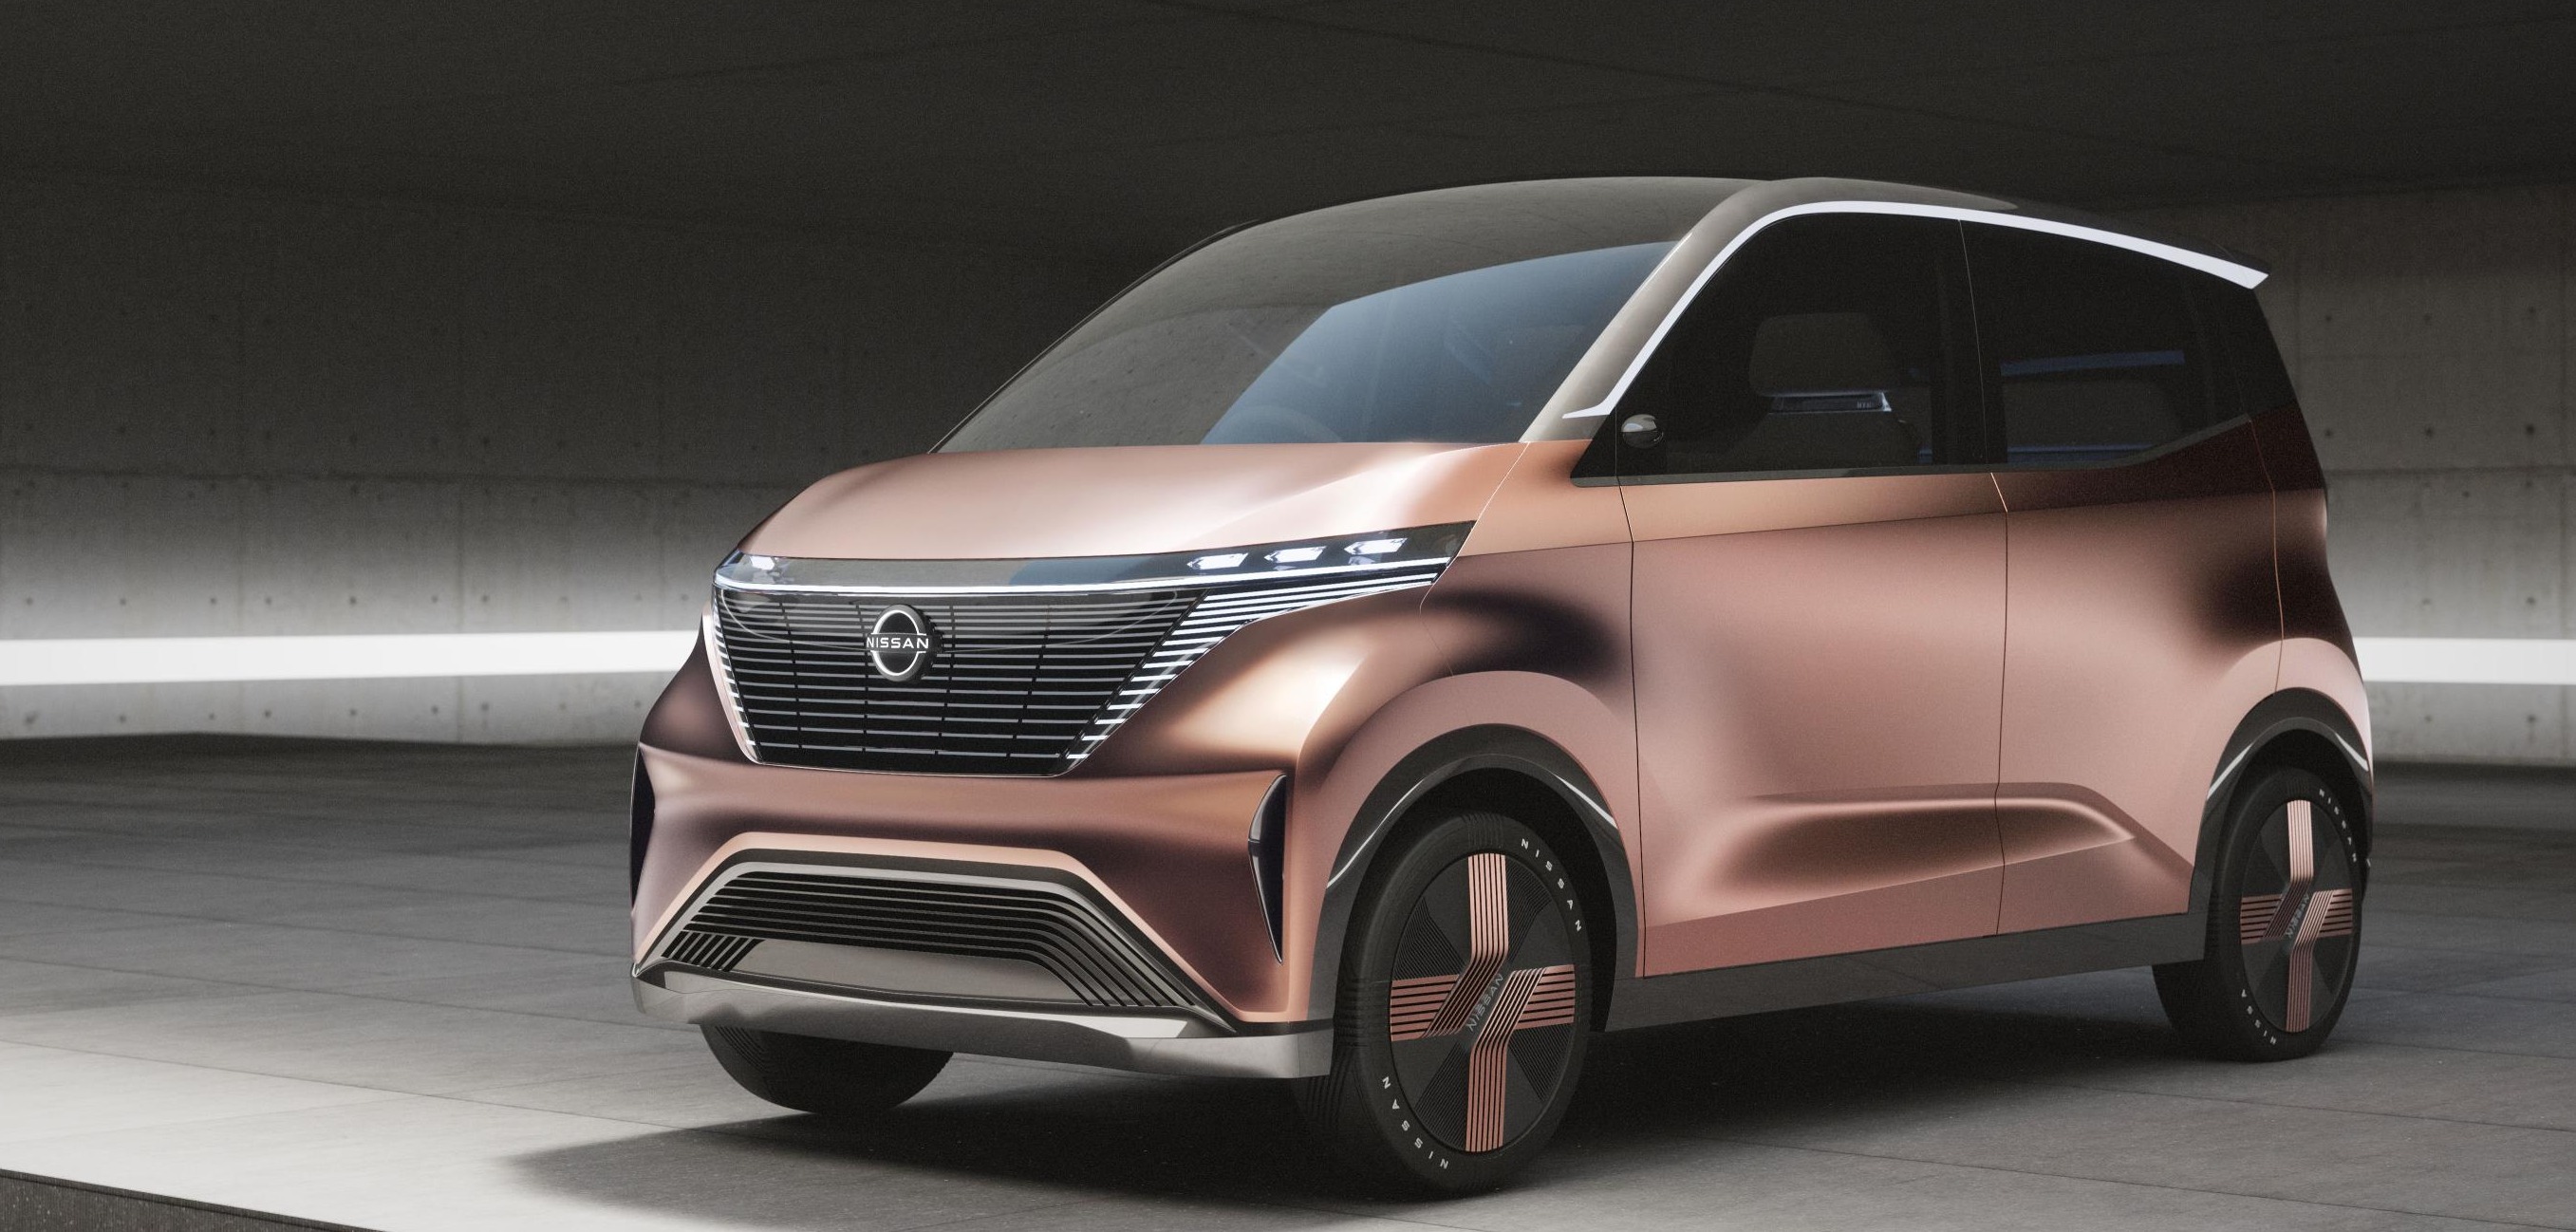 Nissan IMk Futuristic electric city car concept revealed Electric